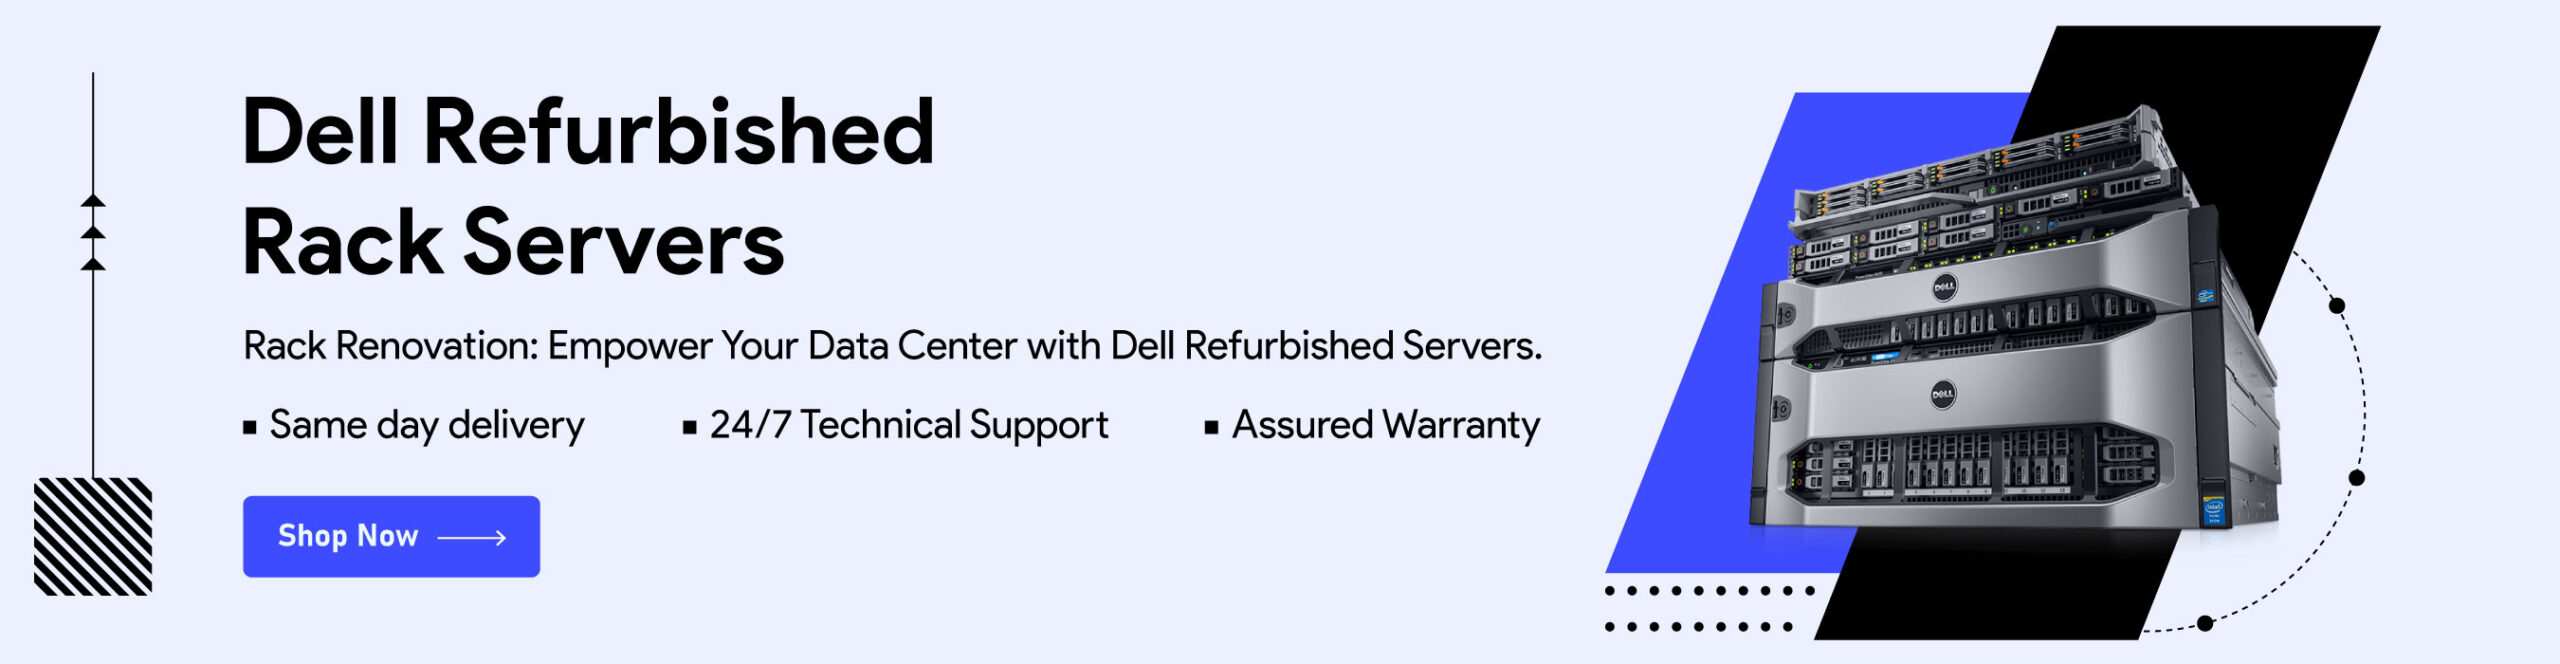 Dell Refurb Rack Server